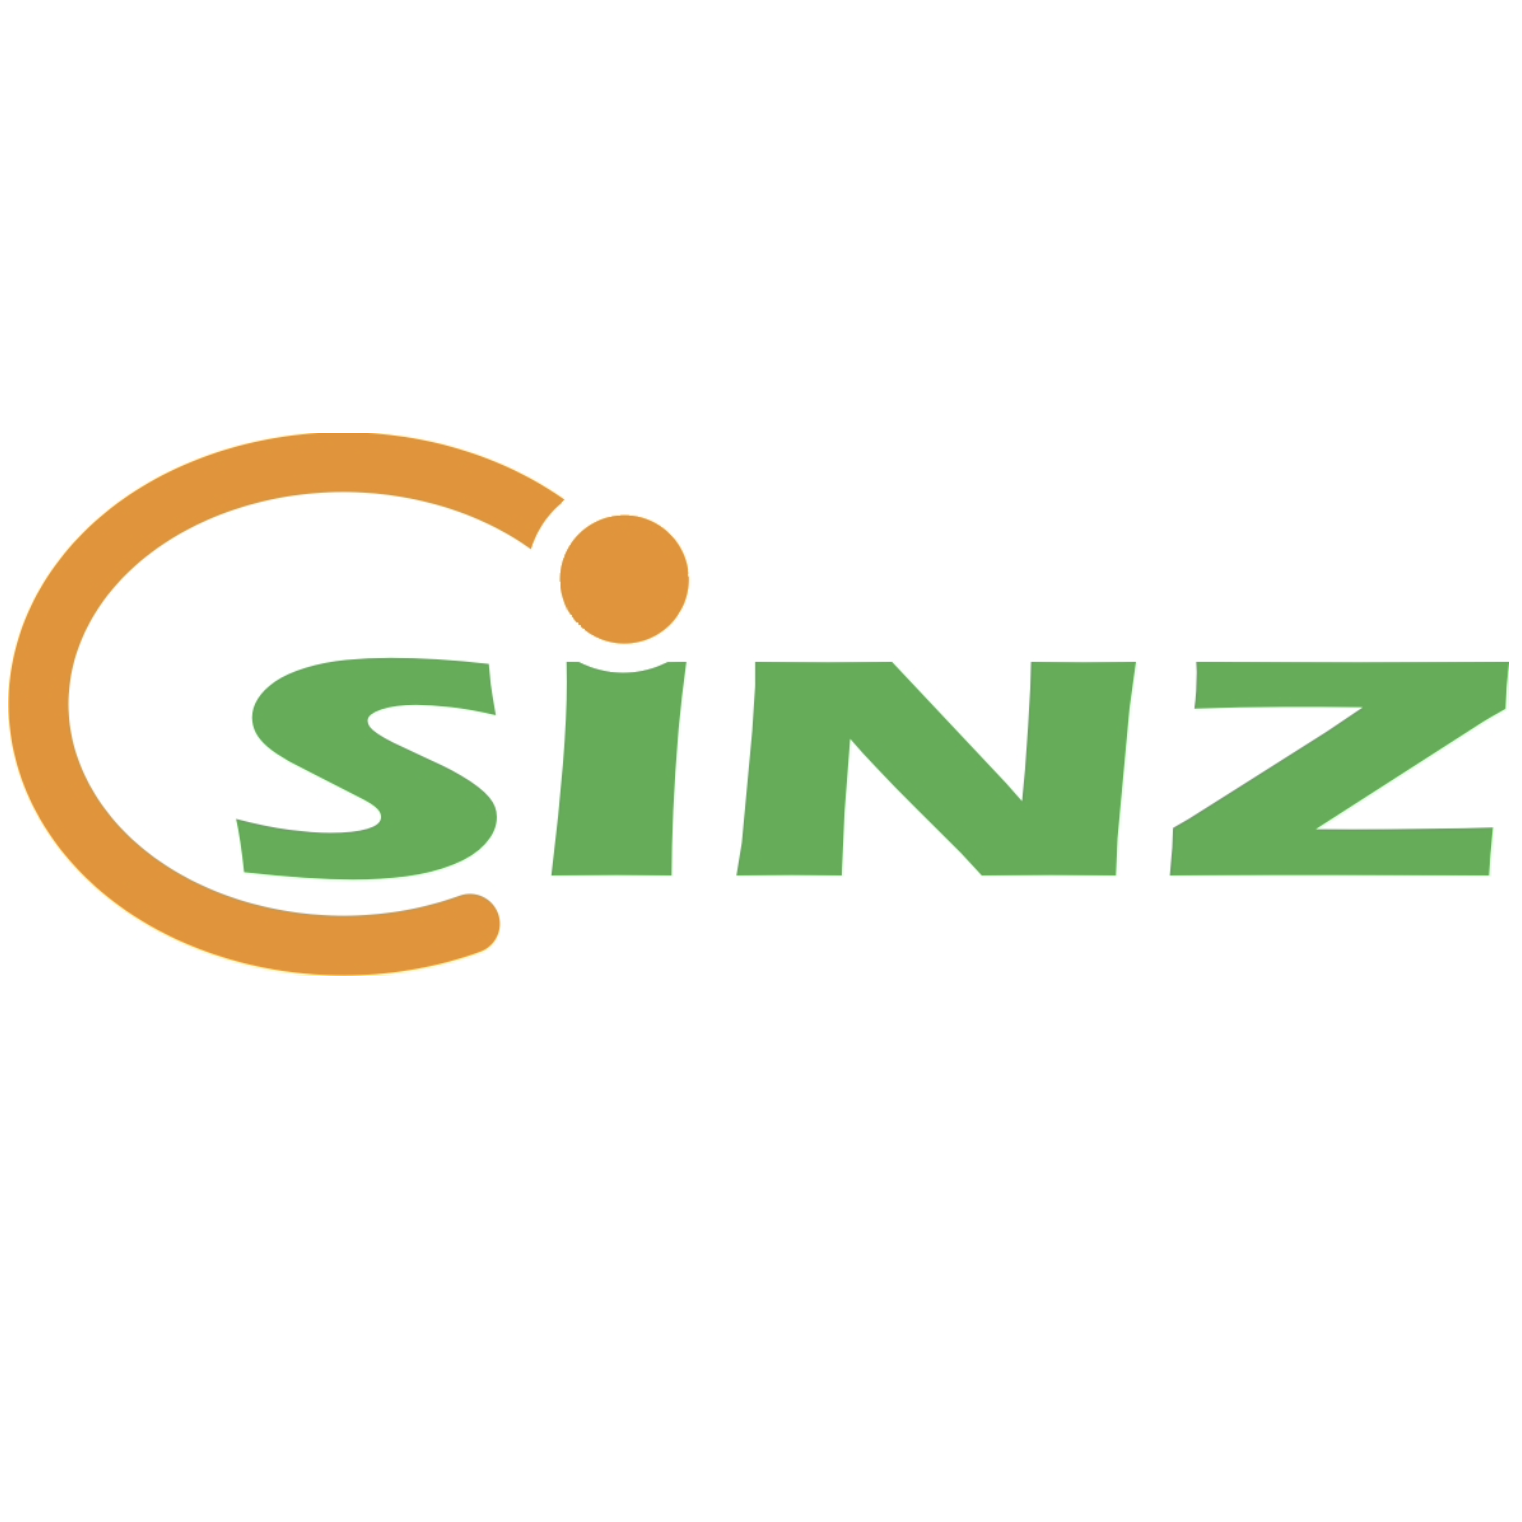 Sinz Entsorgung GmbH in Grünenbach im Allgäu - Logo